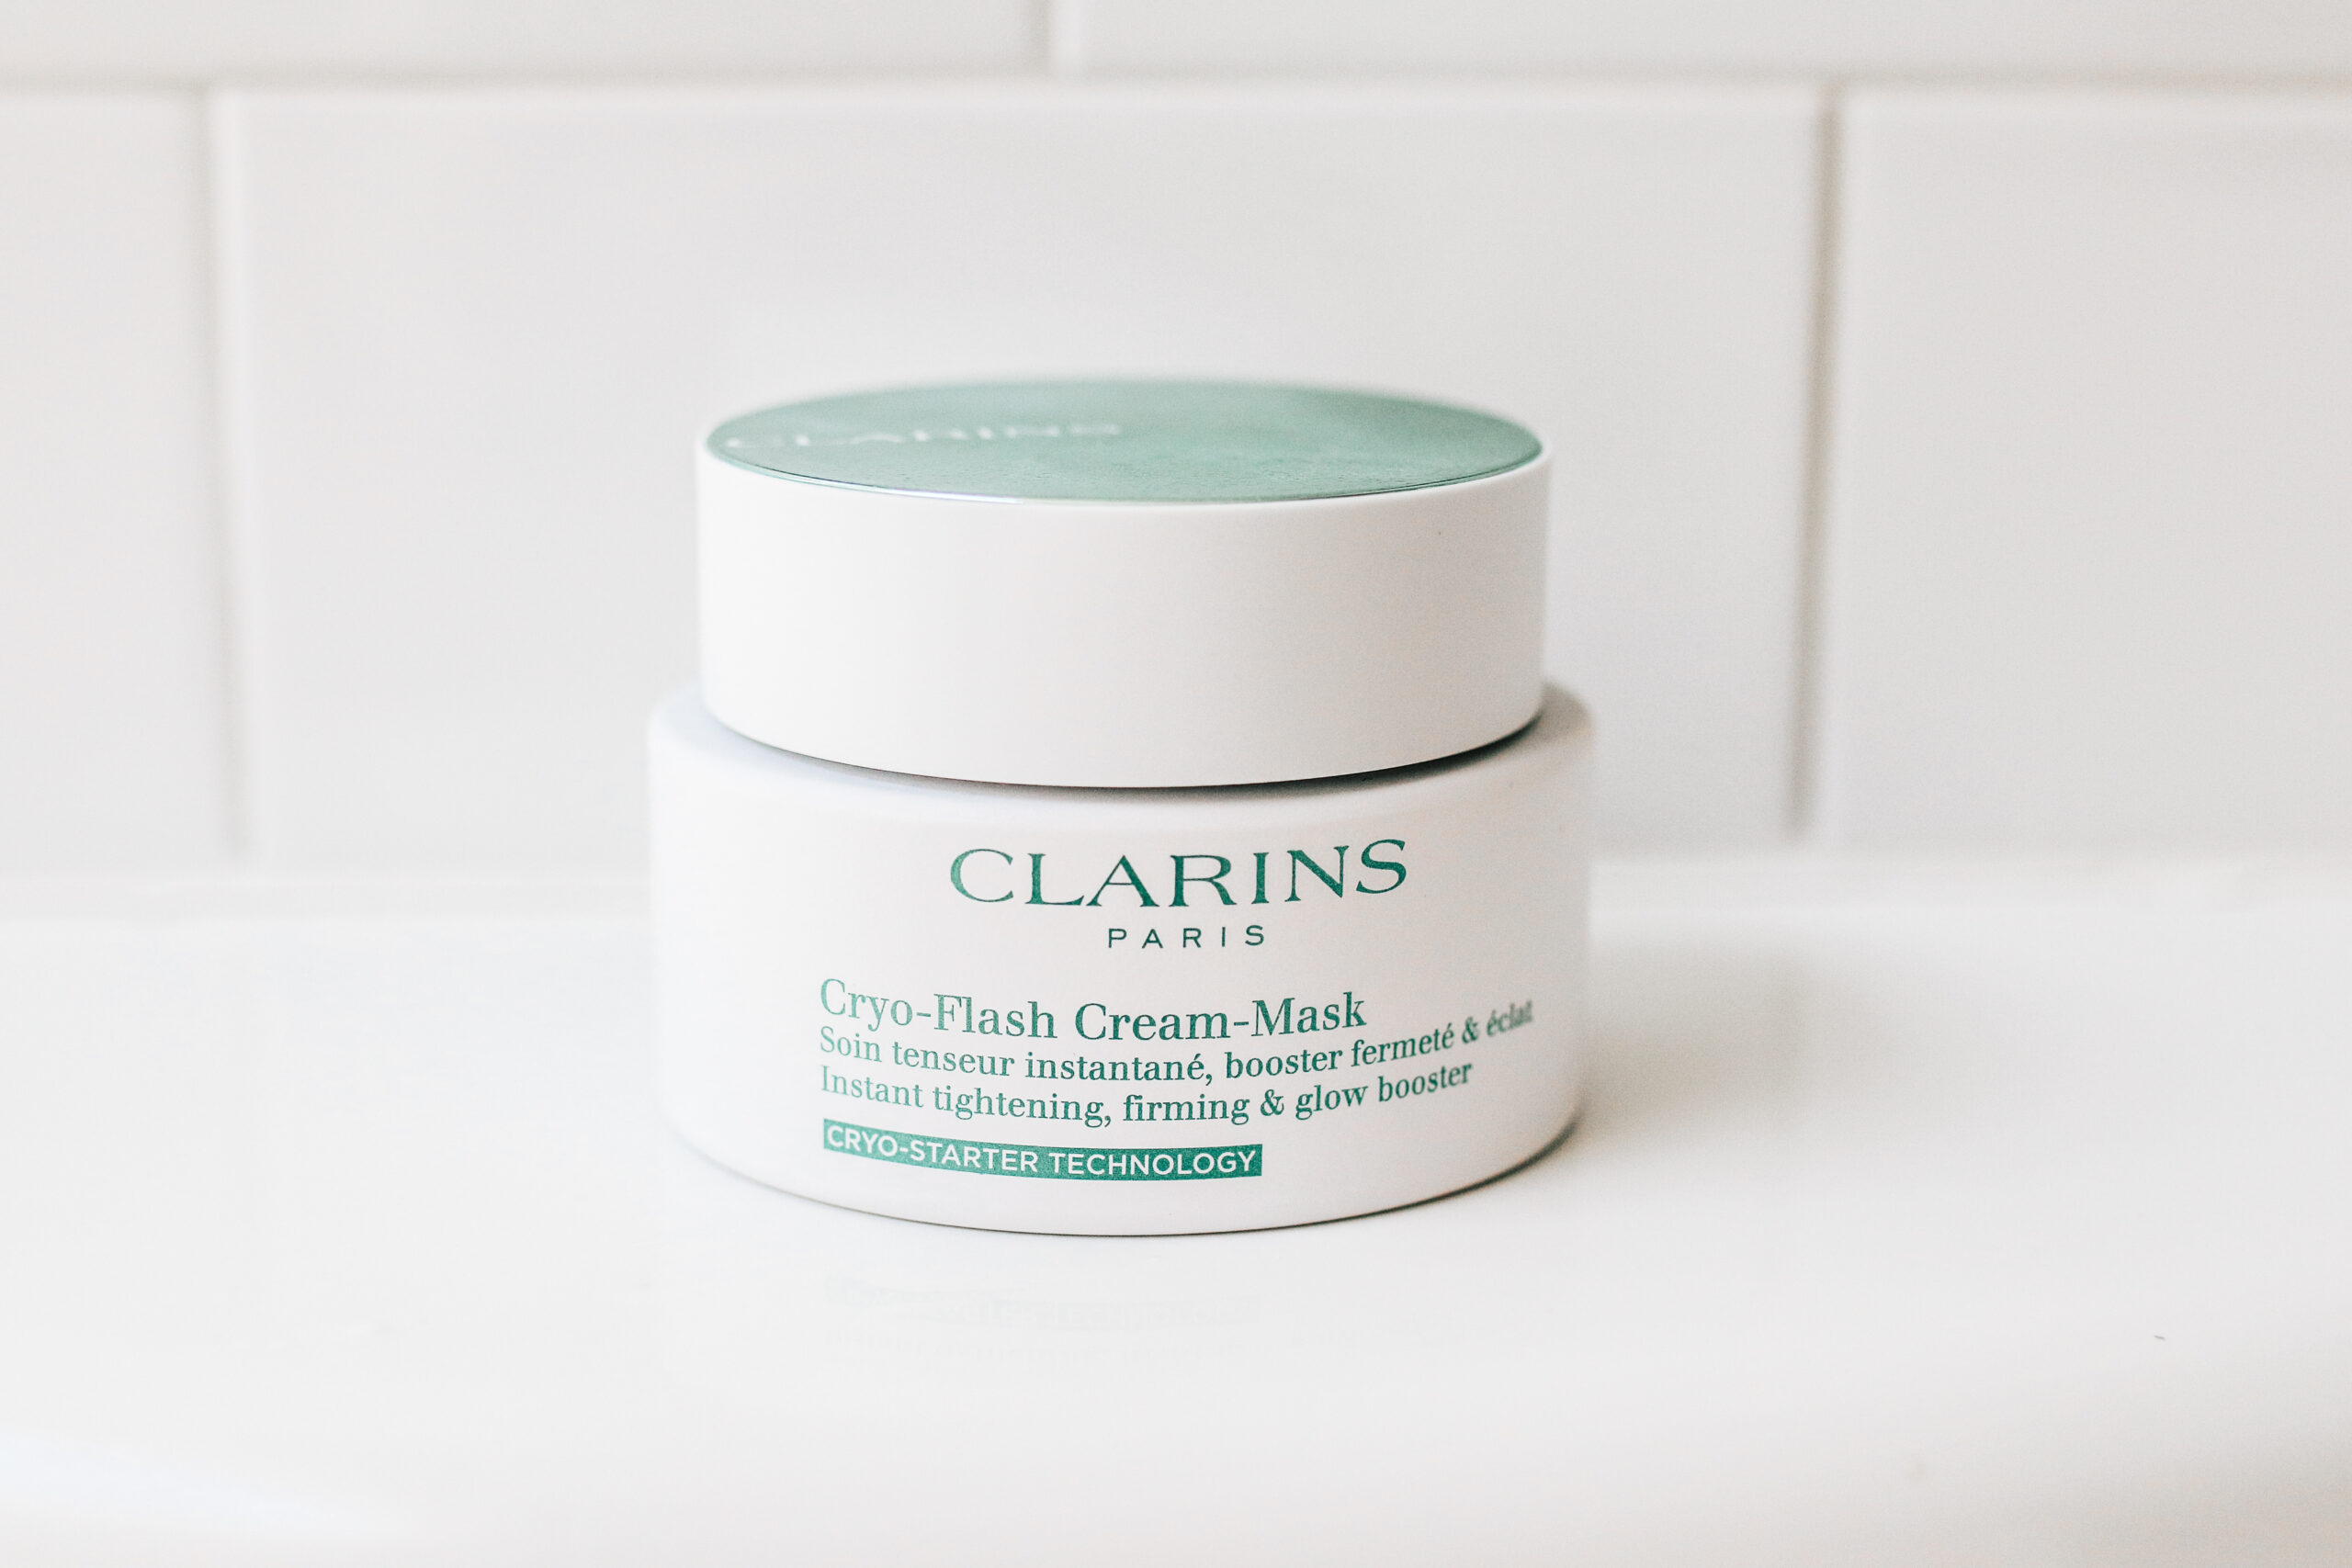 Clarins Cryo Flash Cream Mask Review